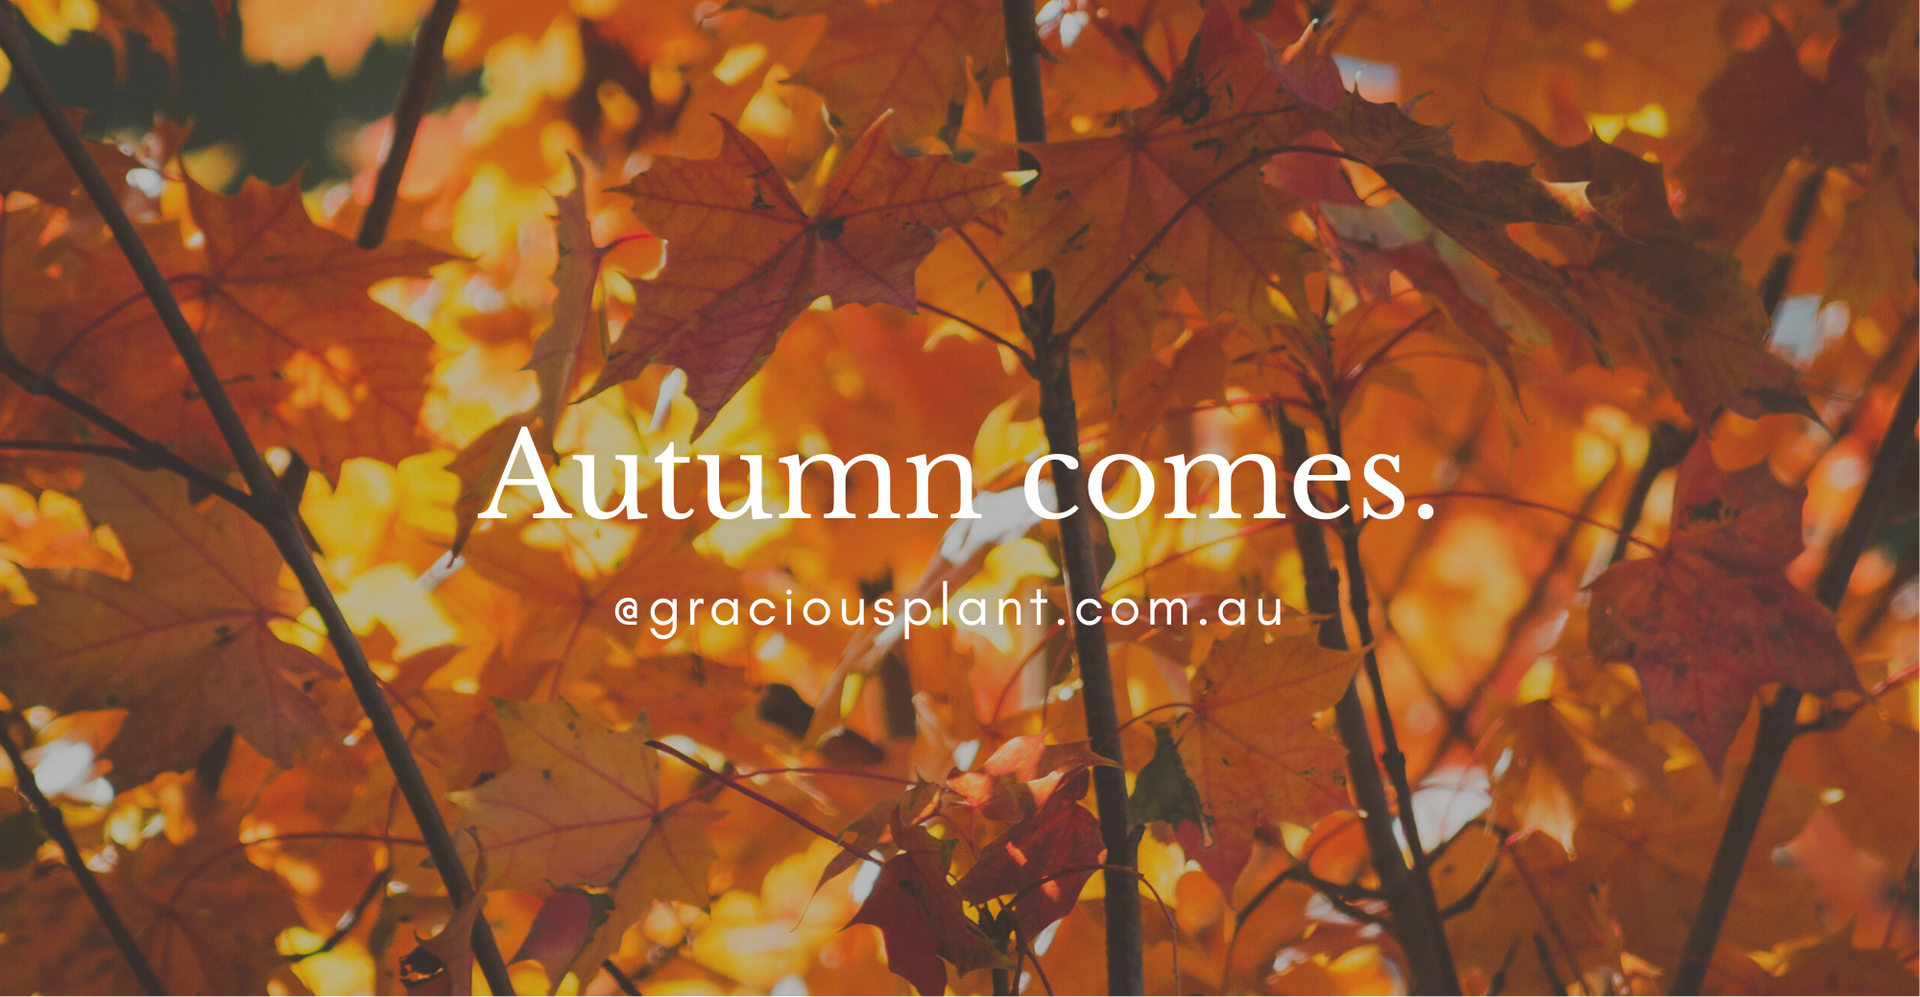 Autumn comes